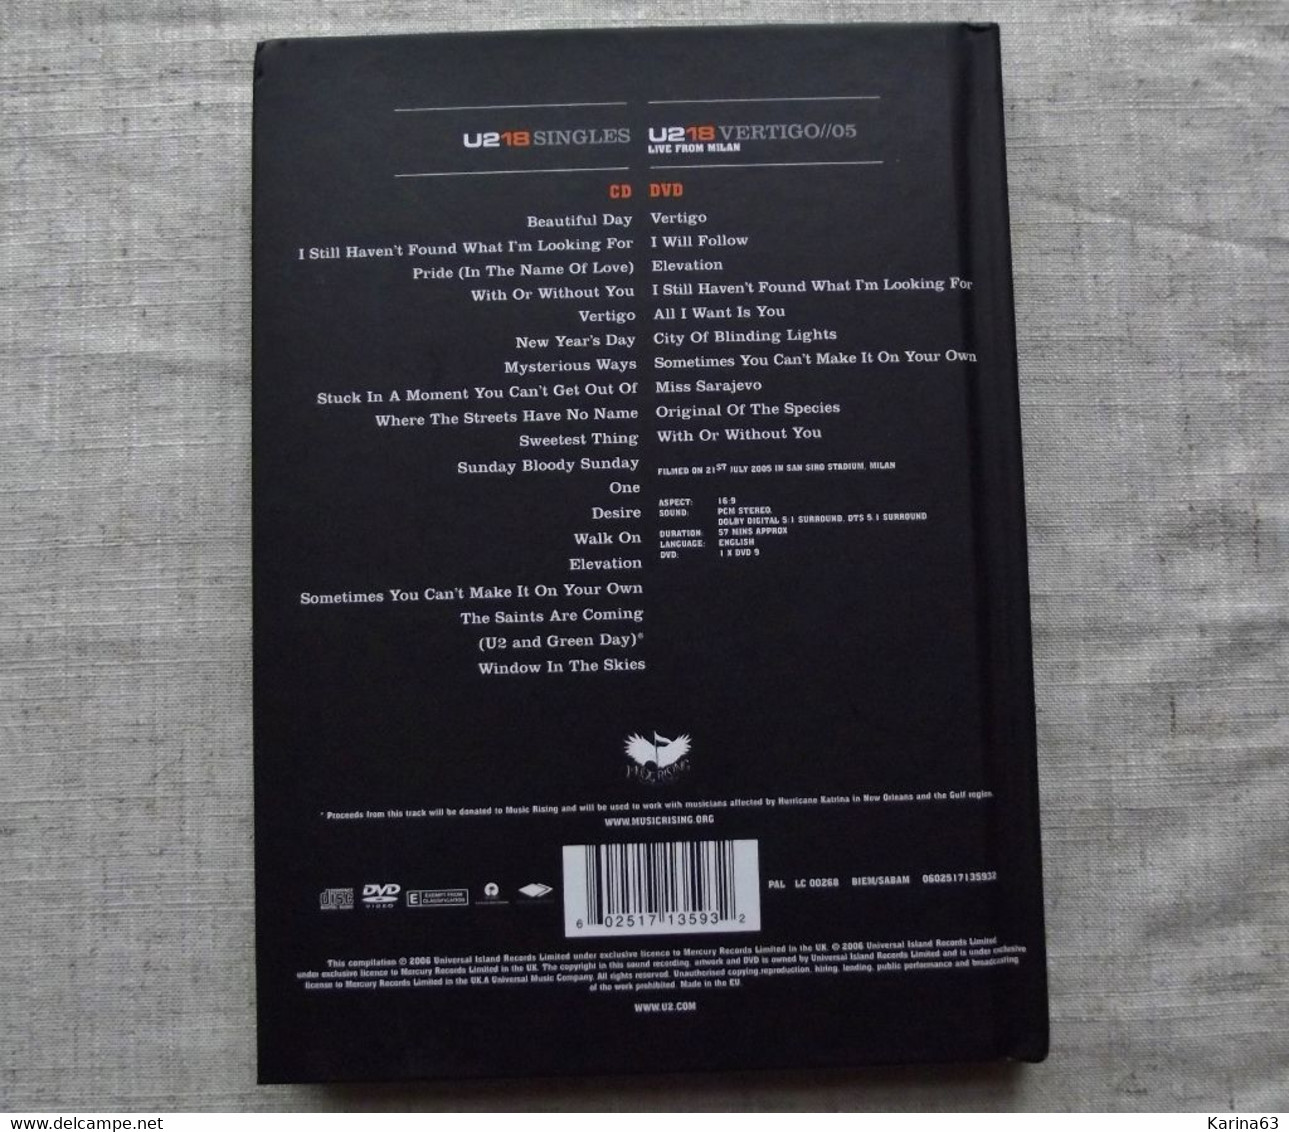 U2 - 18 Singles - 2006 - Music On DVD